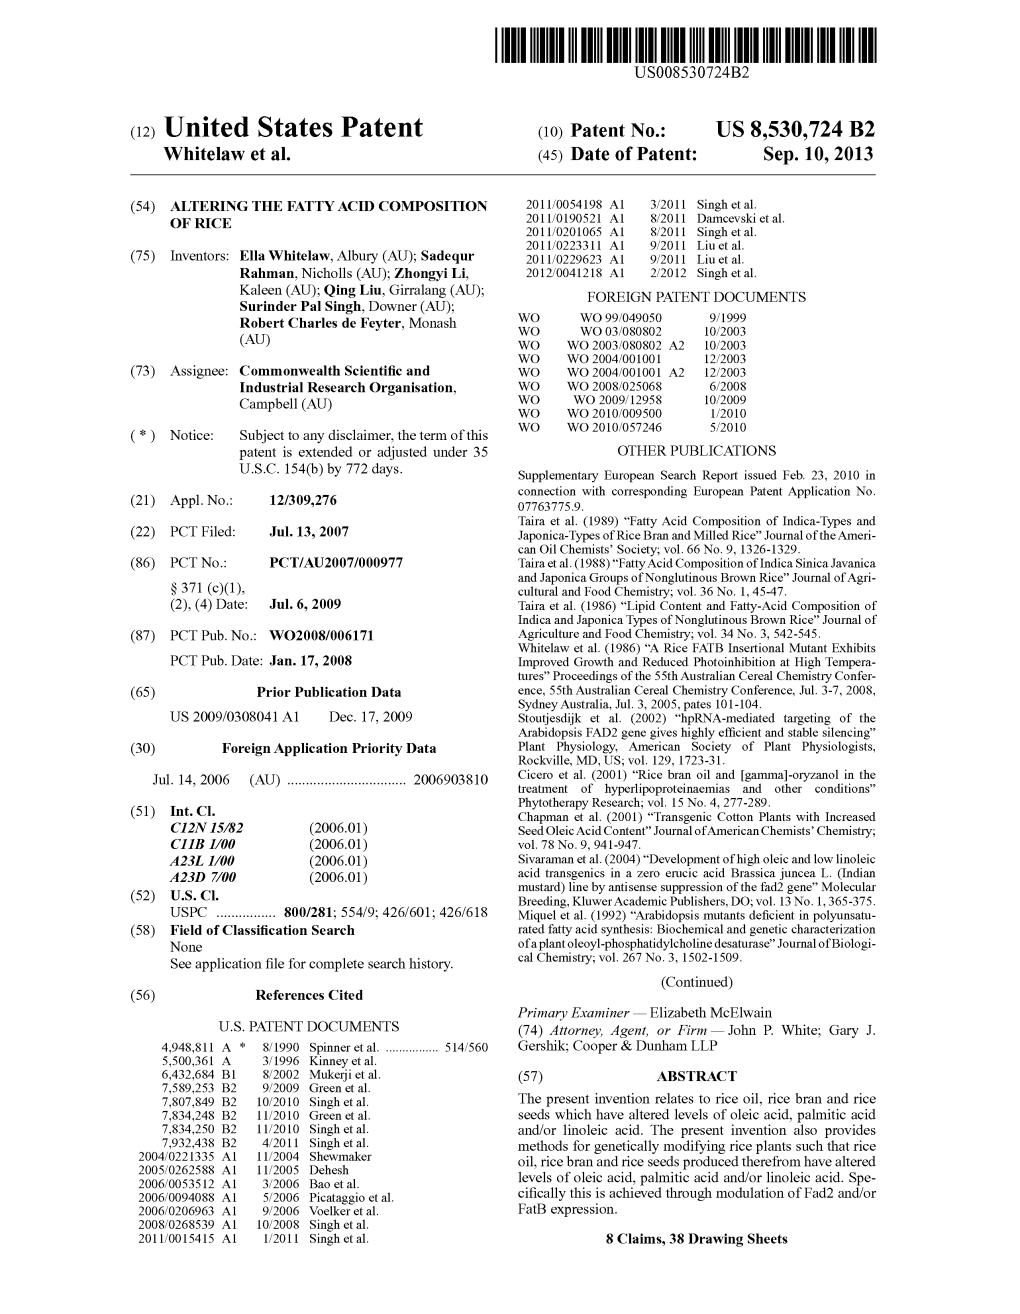 (12) United States Patent (10) Patent No.: US 8,530,724 B2 Whitelaw Et Al